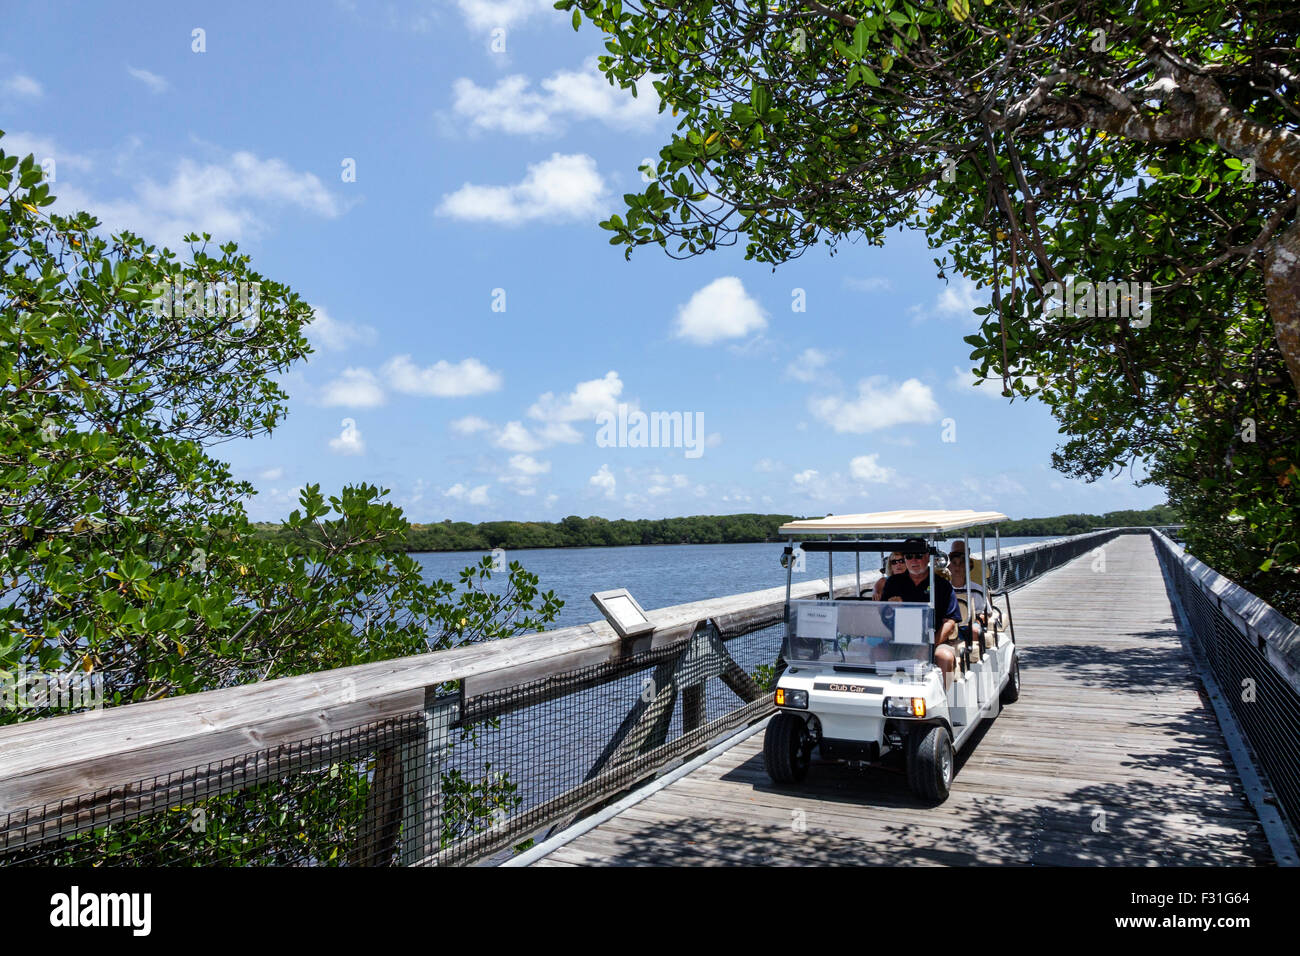 Florida North Palm Beach, John D. MacArthur Beach state Park, Lake Worth Lagoon, passeggiata naturale rialzata, navetta gratuita, elettrica, cart, FL150415020 Foto Stock